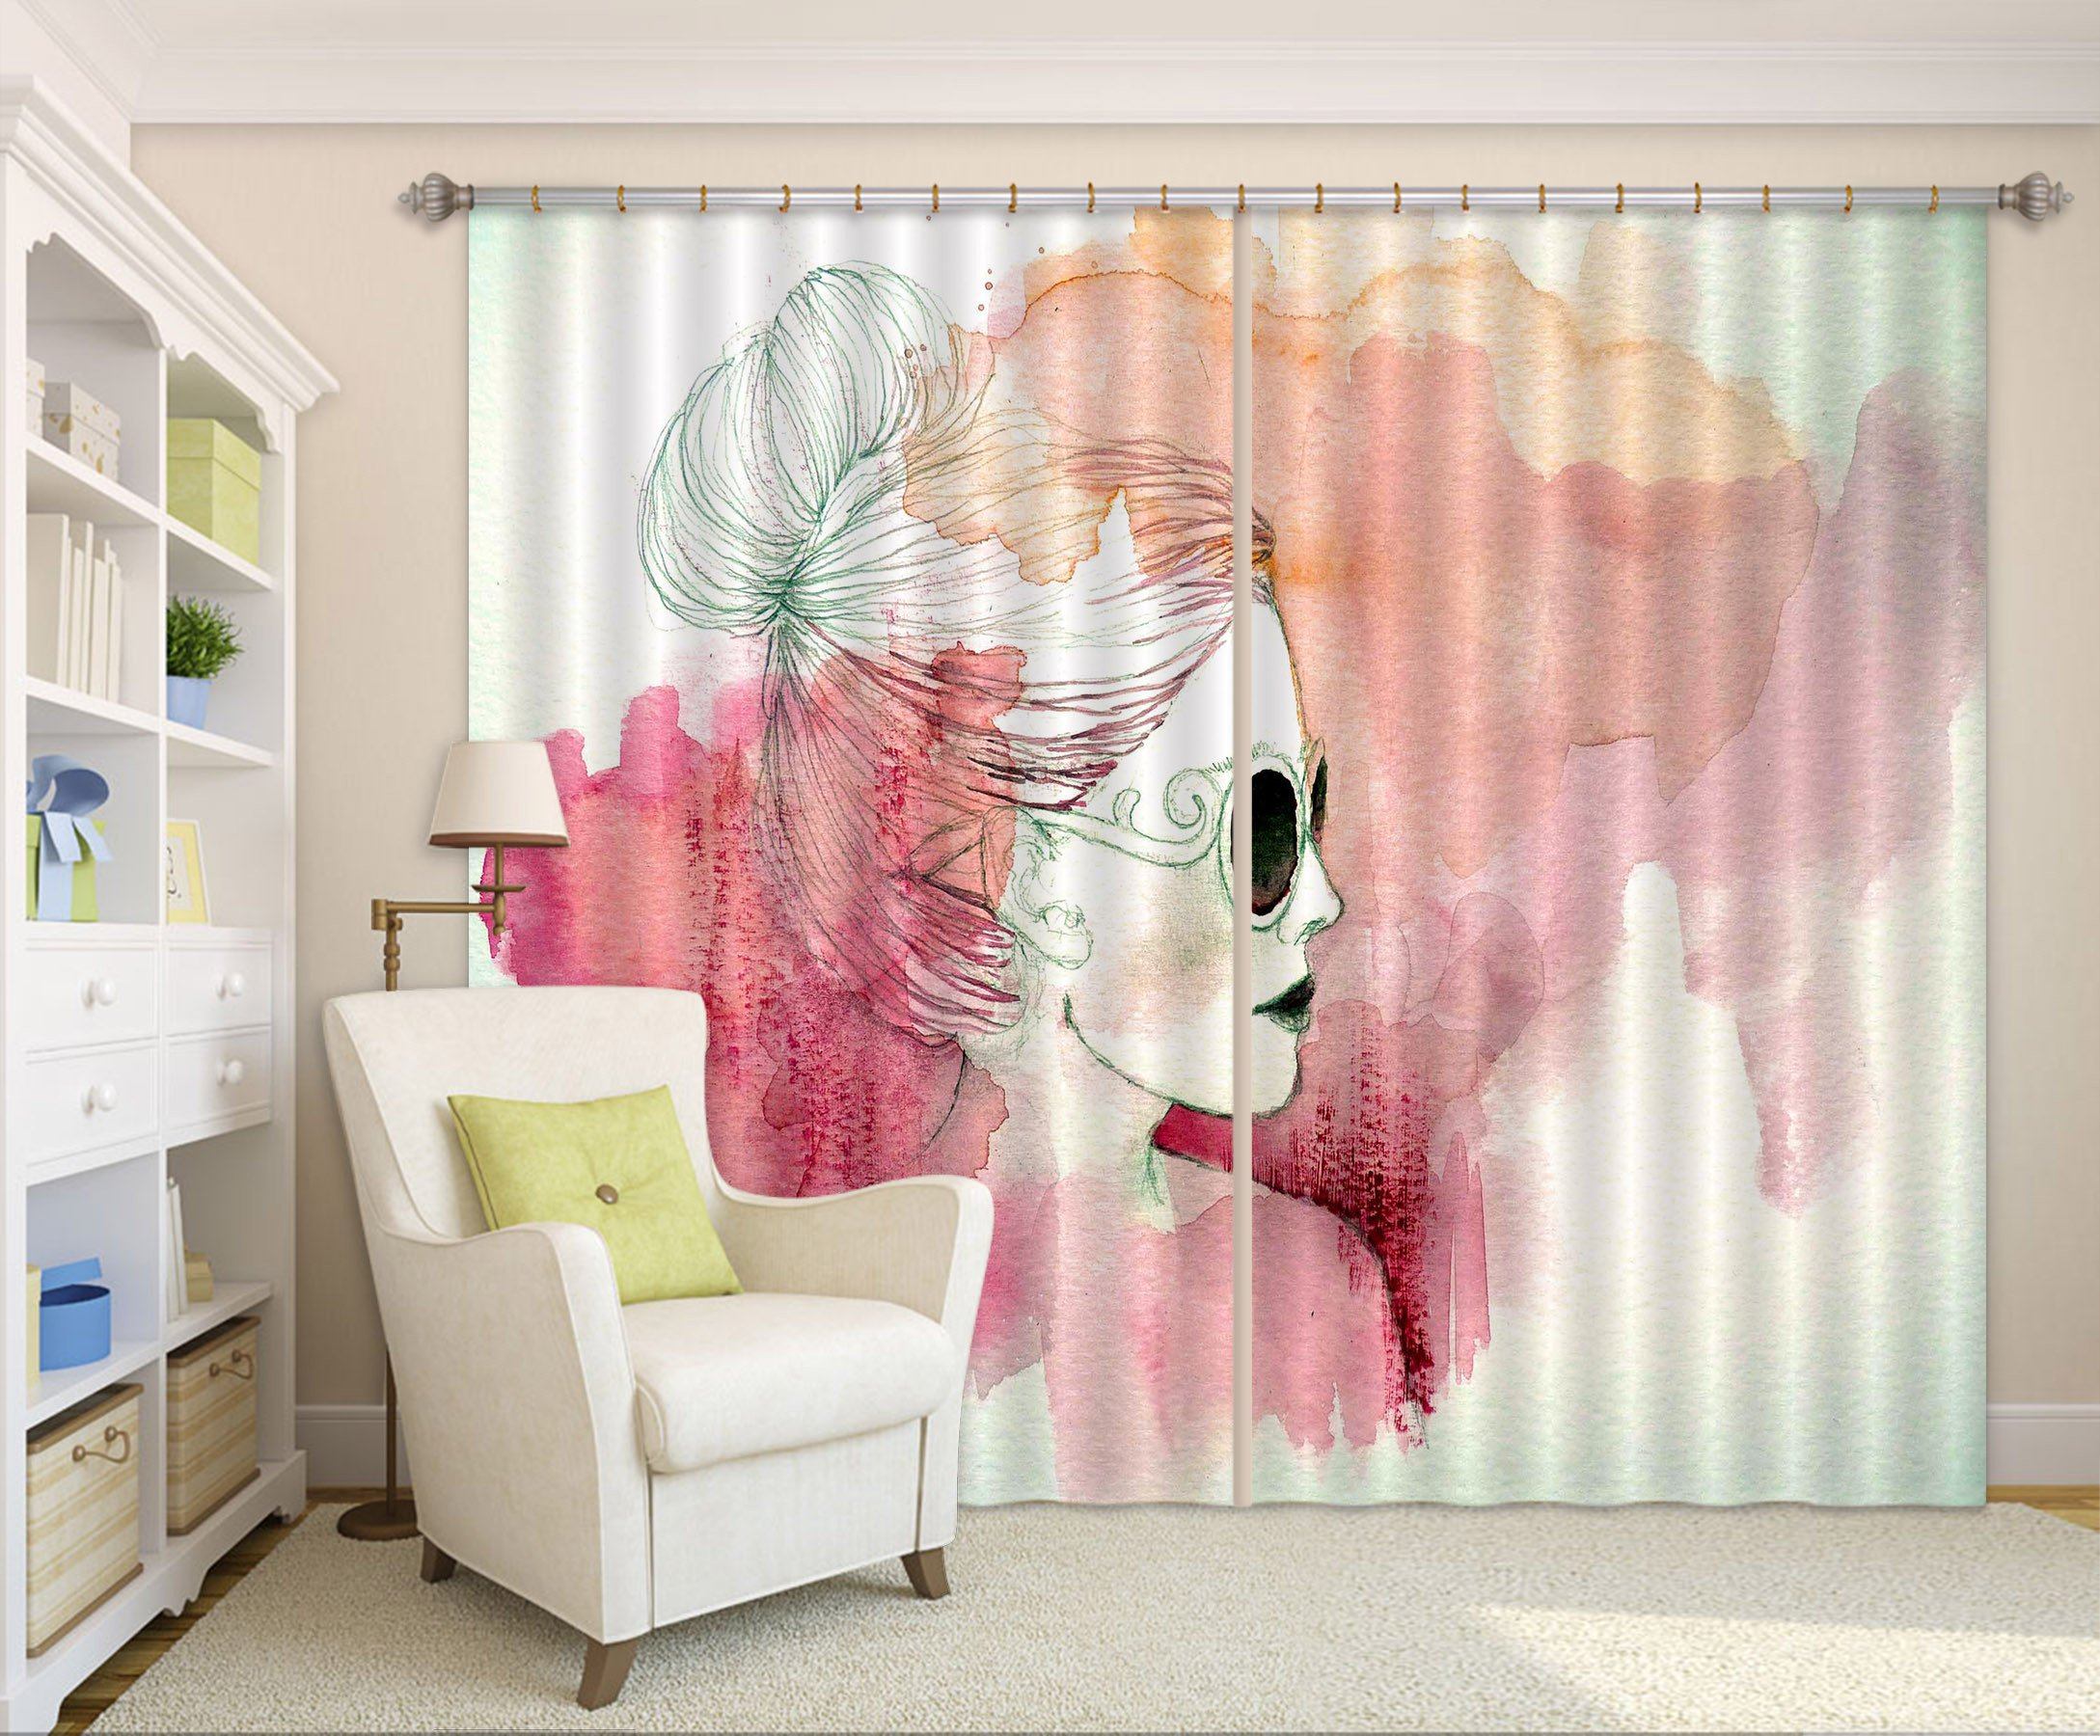 3D Watercolor Woman 24 Curtains Drapes Wallpaper AJ Wallpaper 